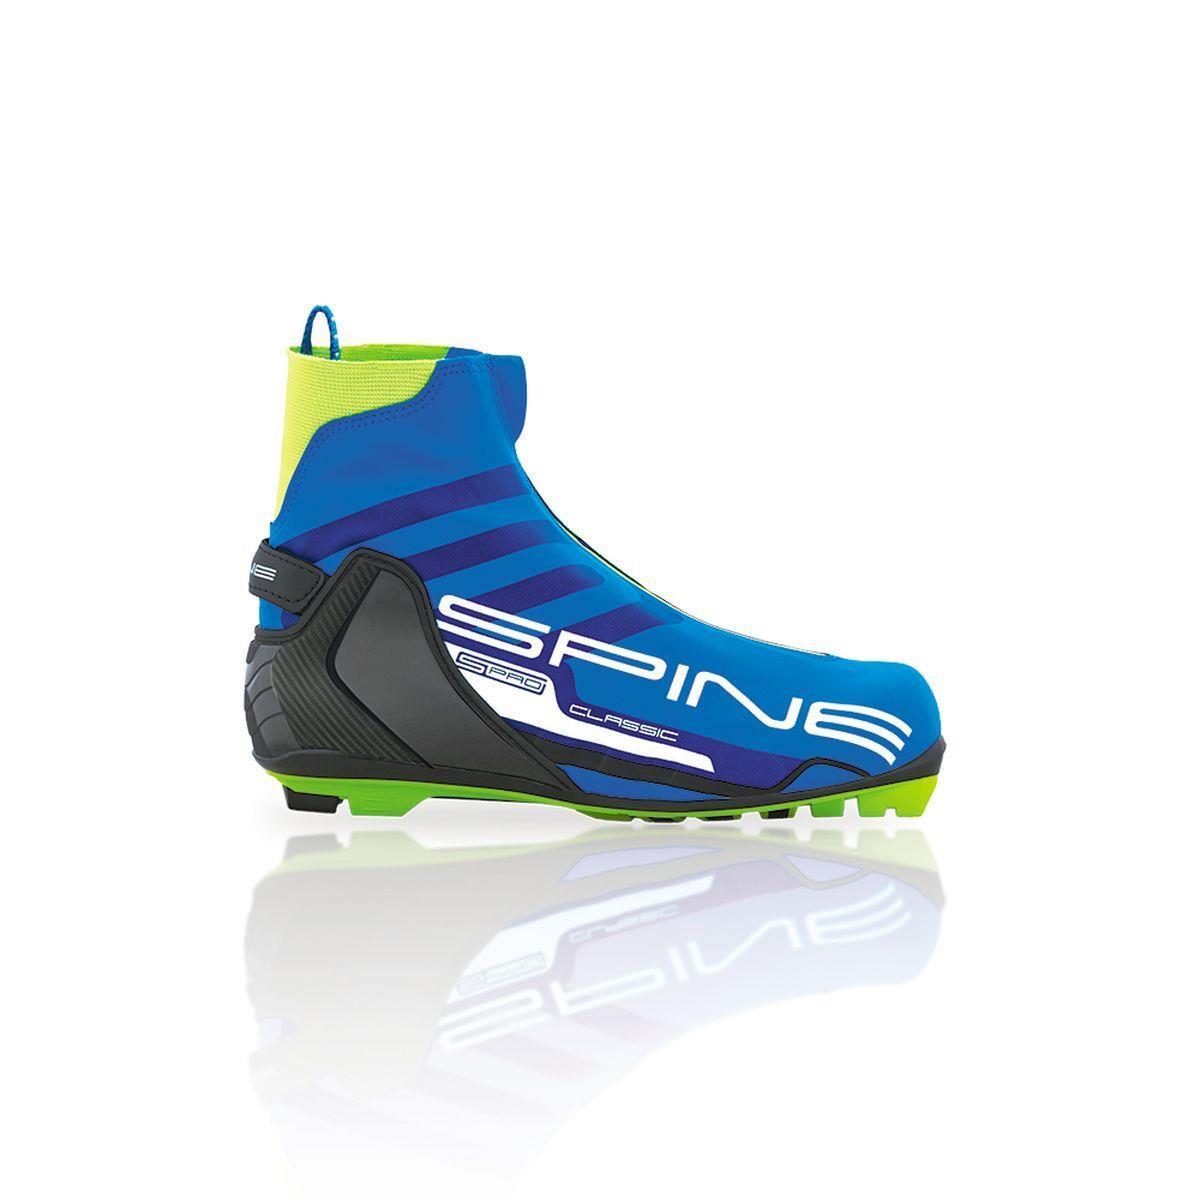 Лыжные ботинки Лыжные ботинки NNN SPINE CLASSIC 294